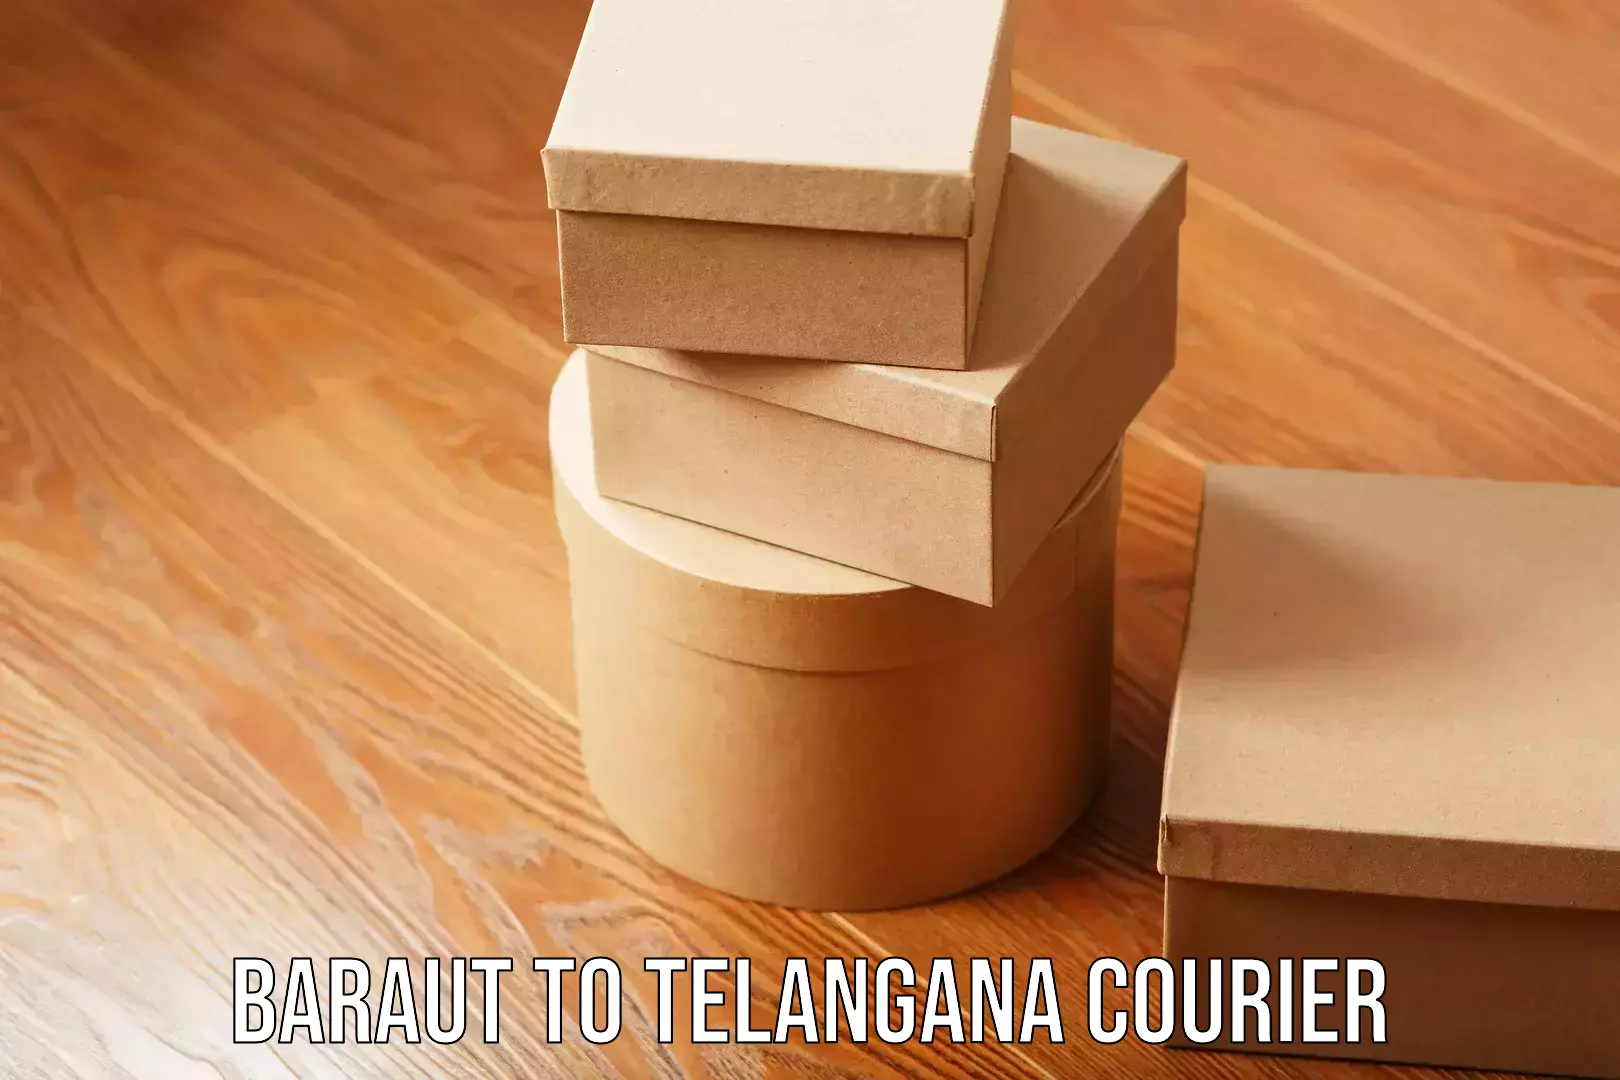 Digital courier platforms Baraut to Telangana